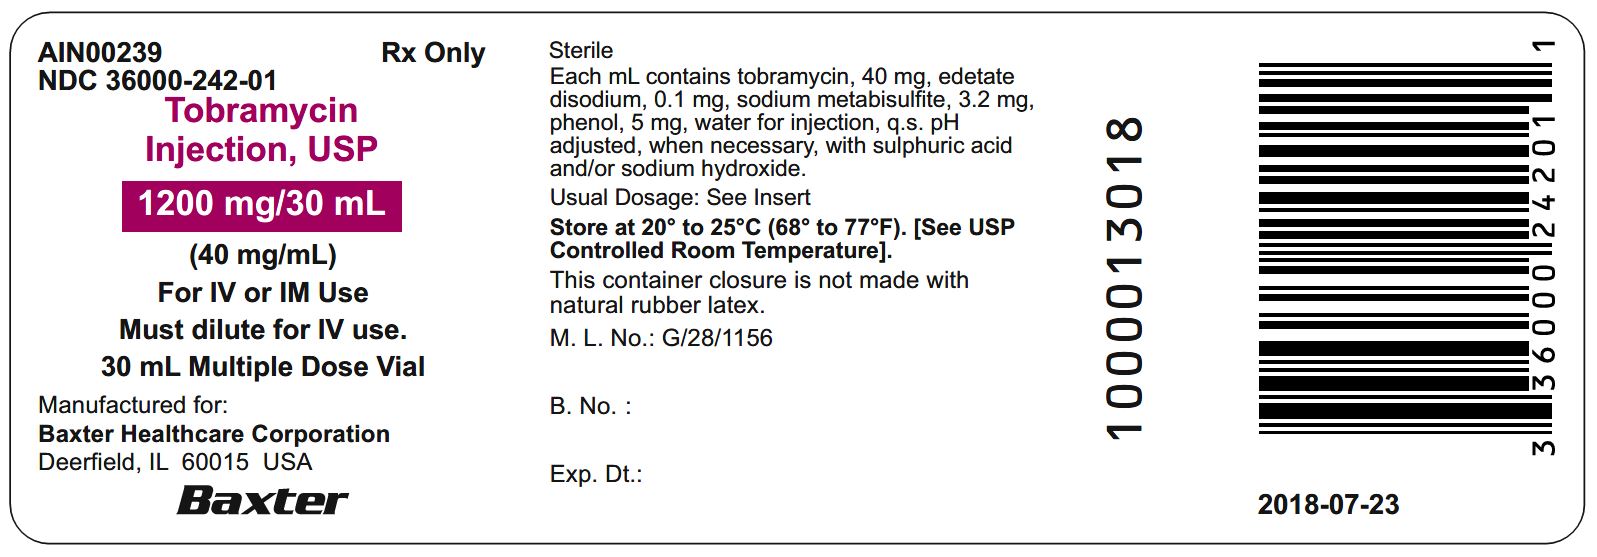 tobramycin-container-label-30ml